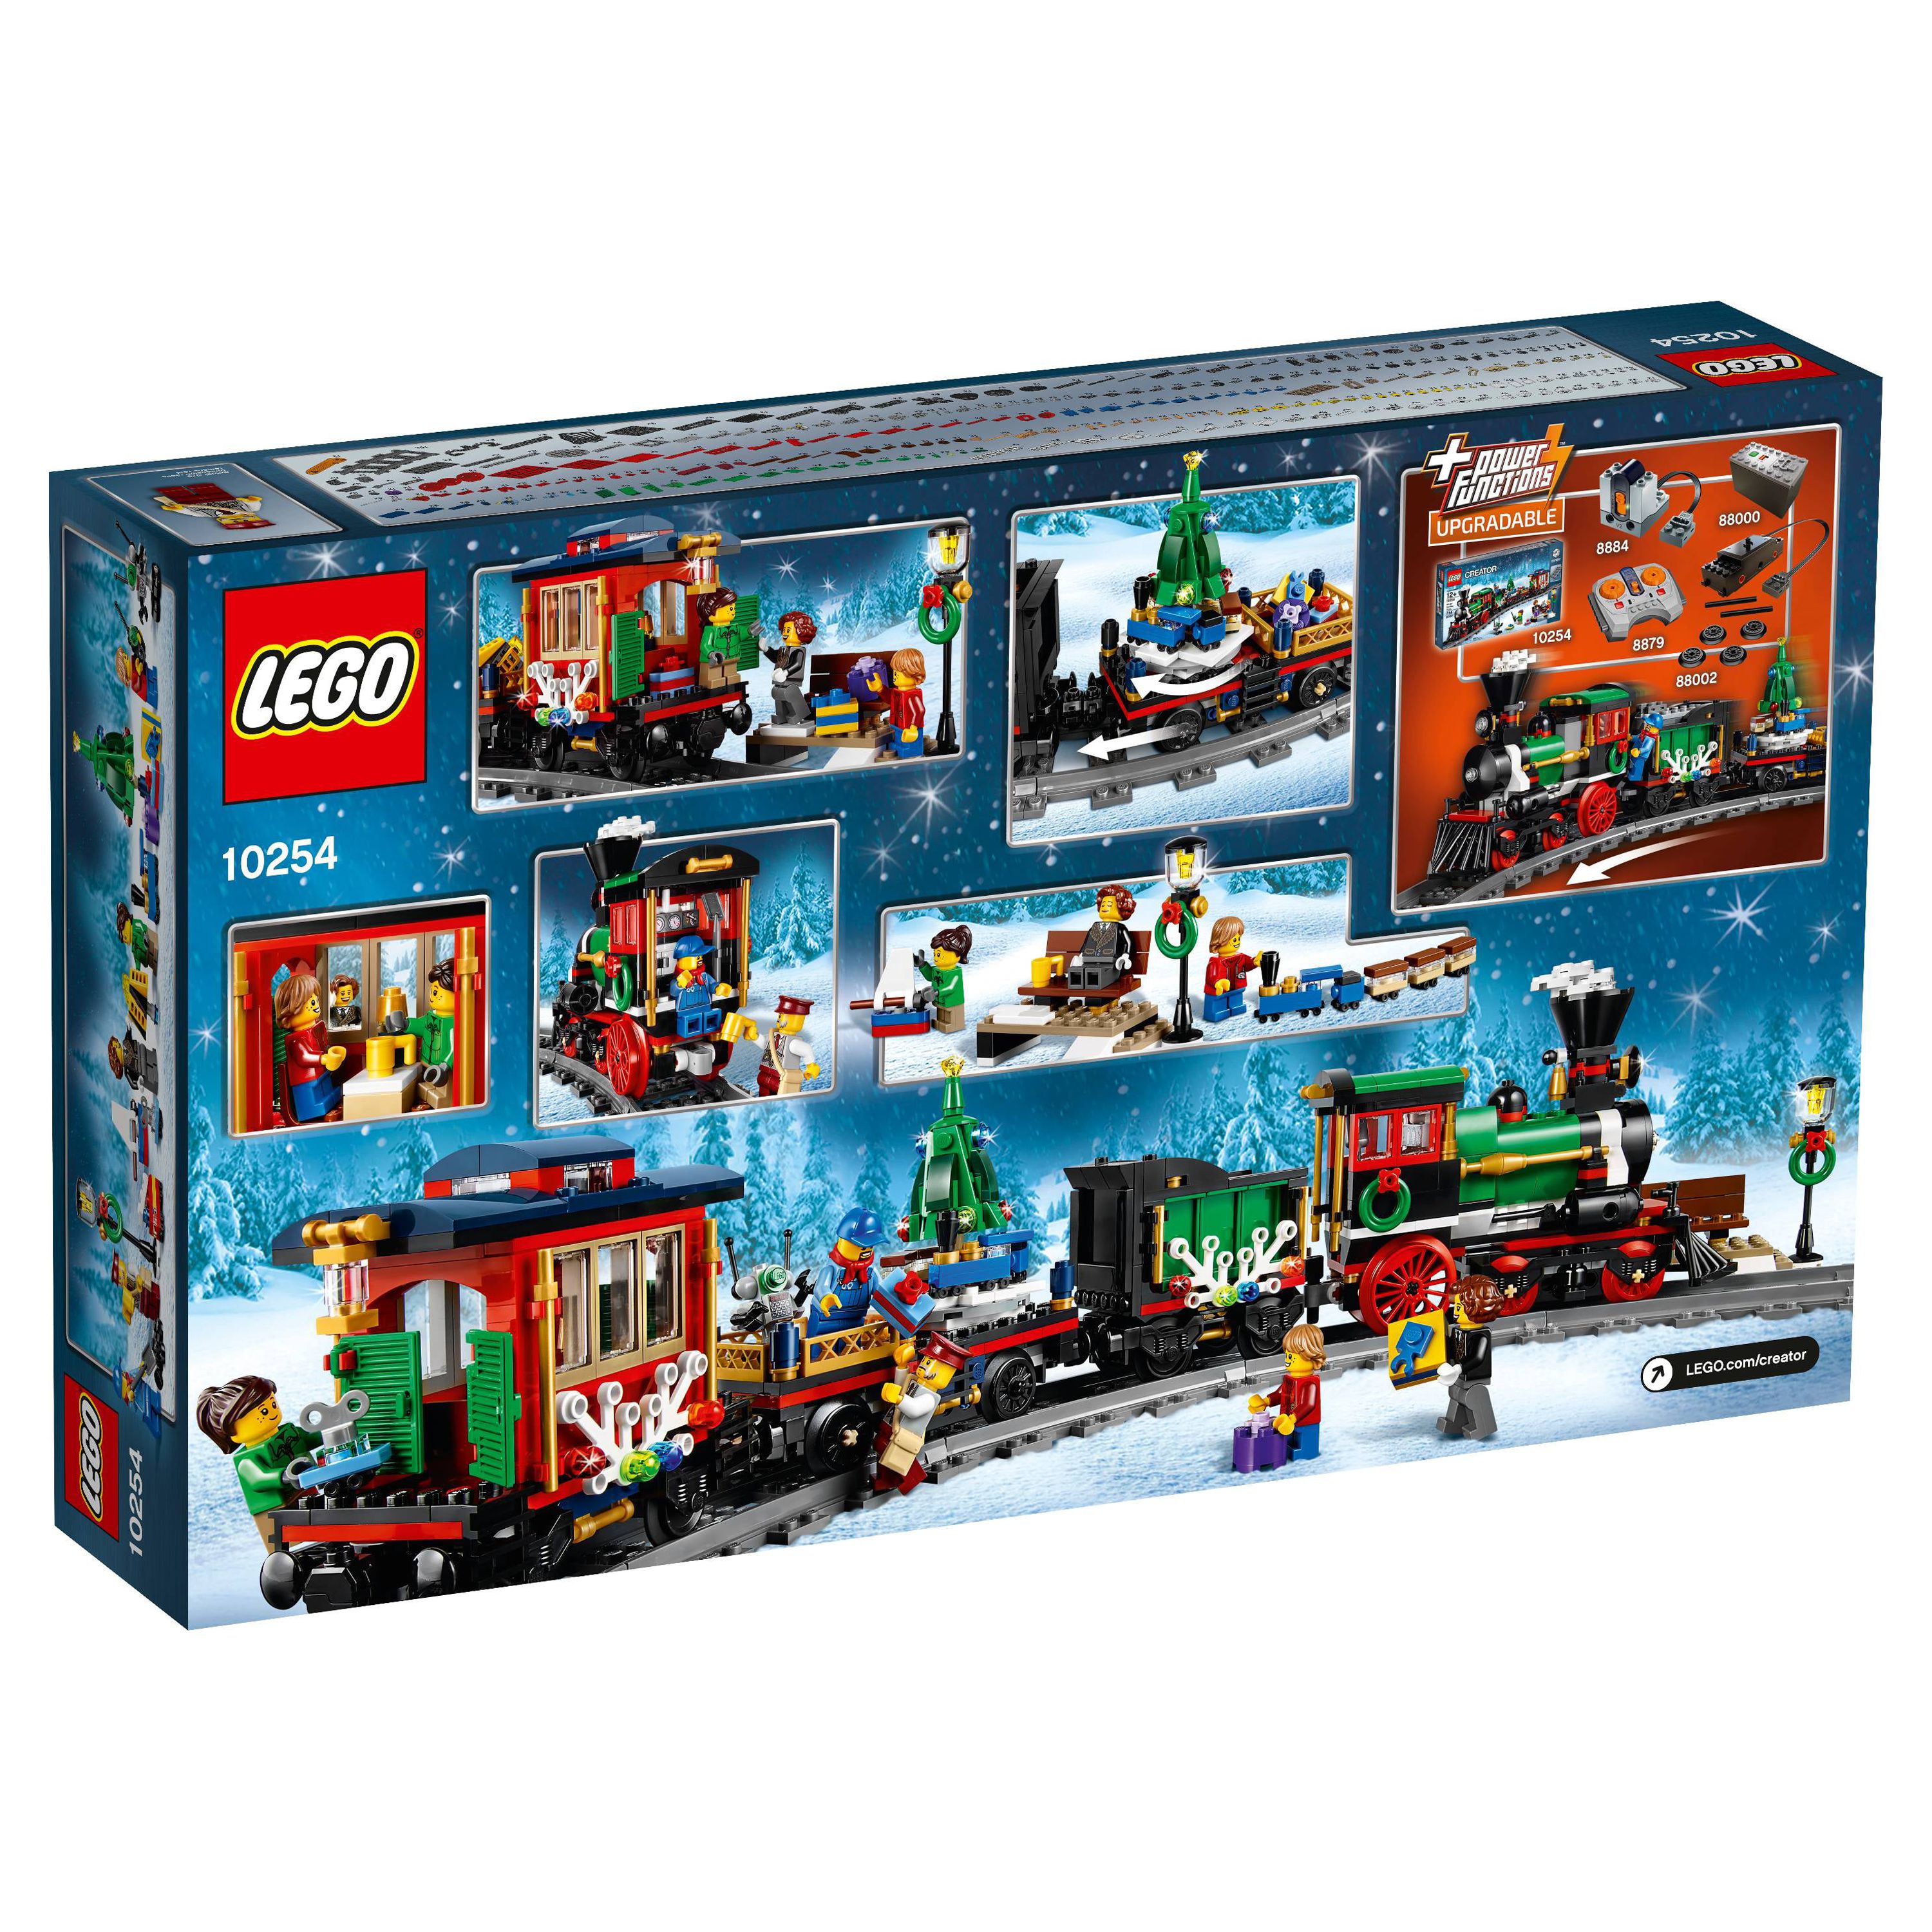 LEGO Creator Expert Winter Holiday Train 10254 - image 4 of 6